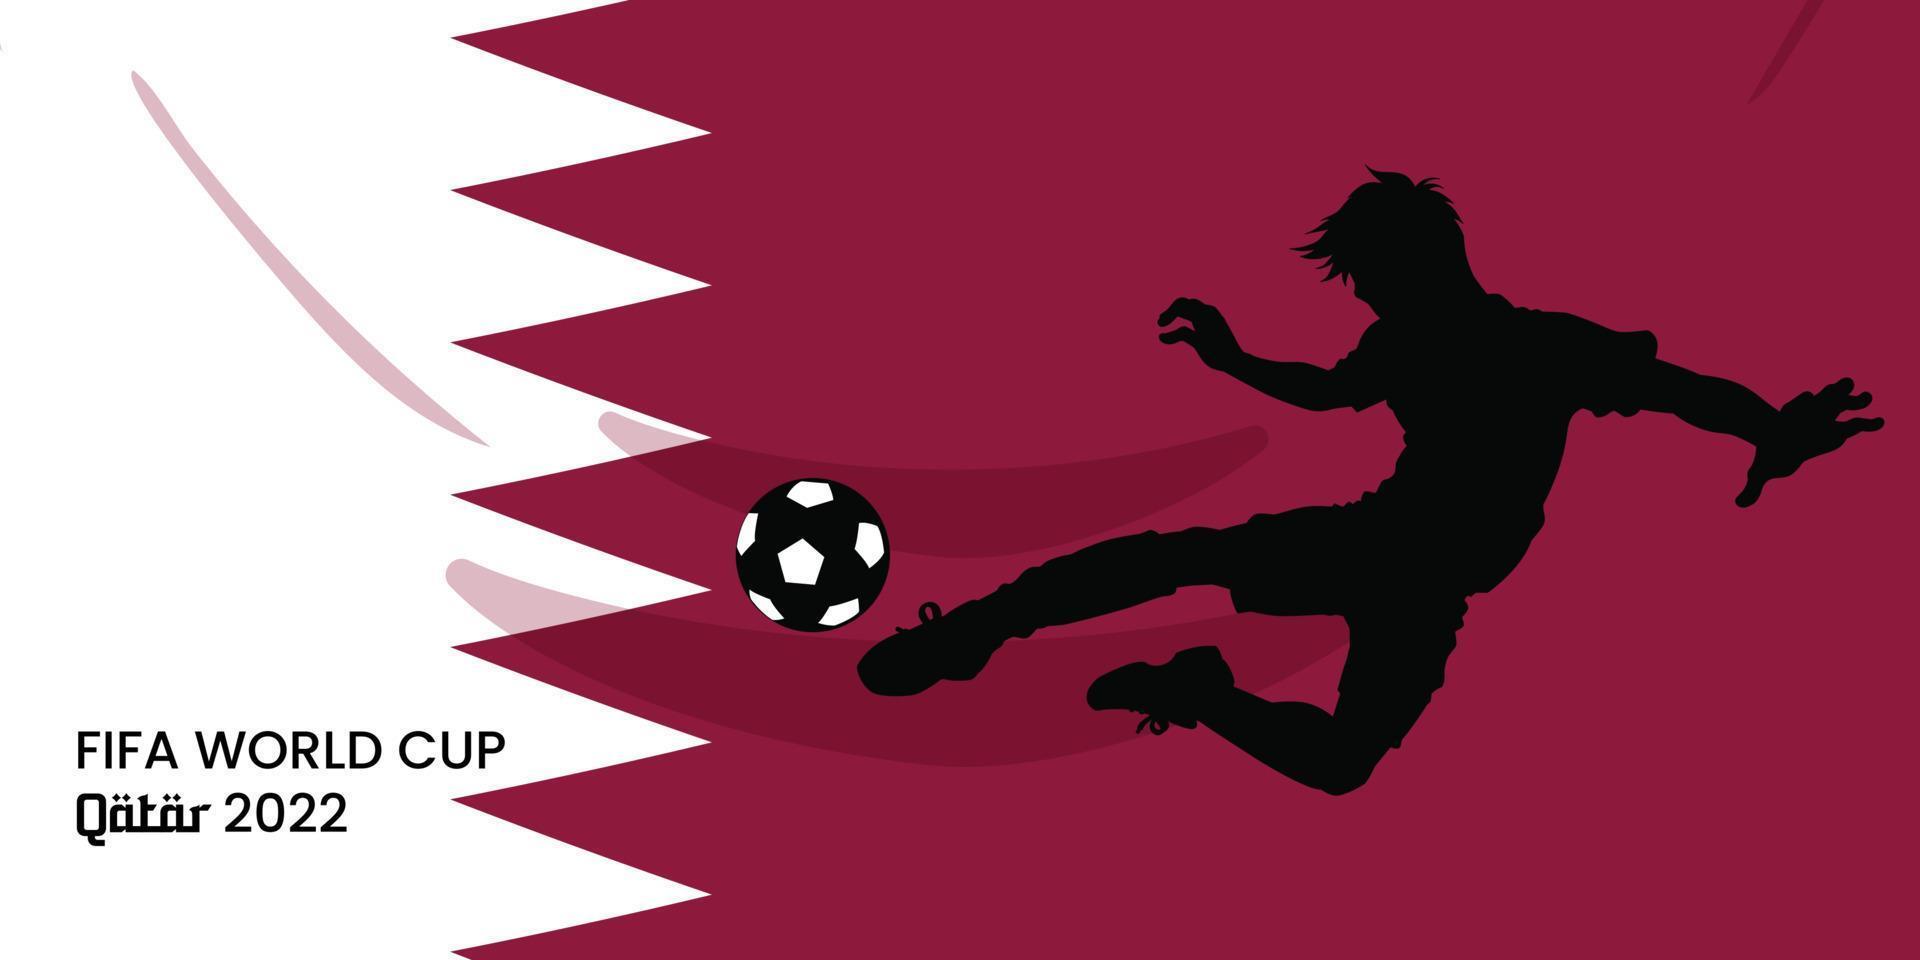 Fifa World Cup with soccer player on Qatar flag. International football organization in Qatar. vector